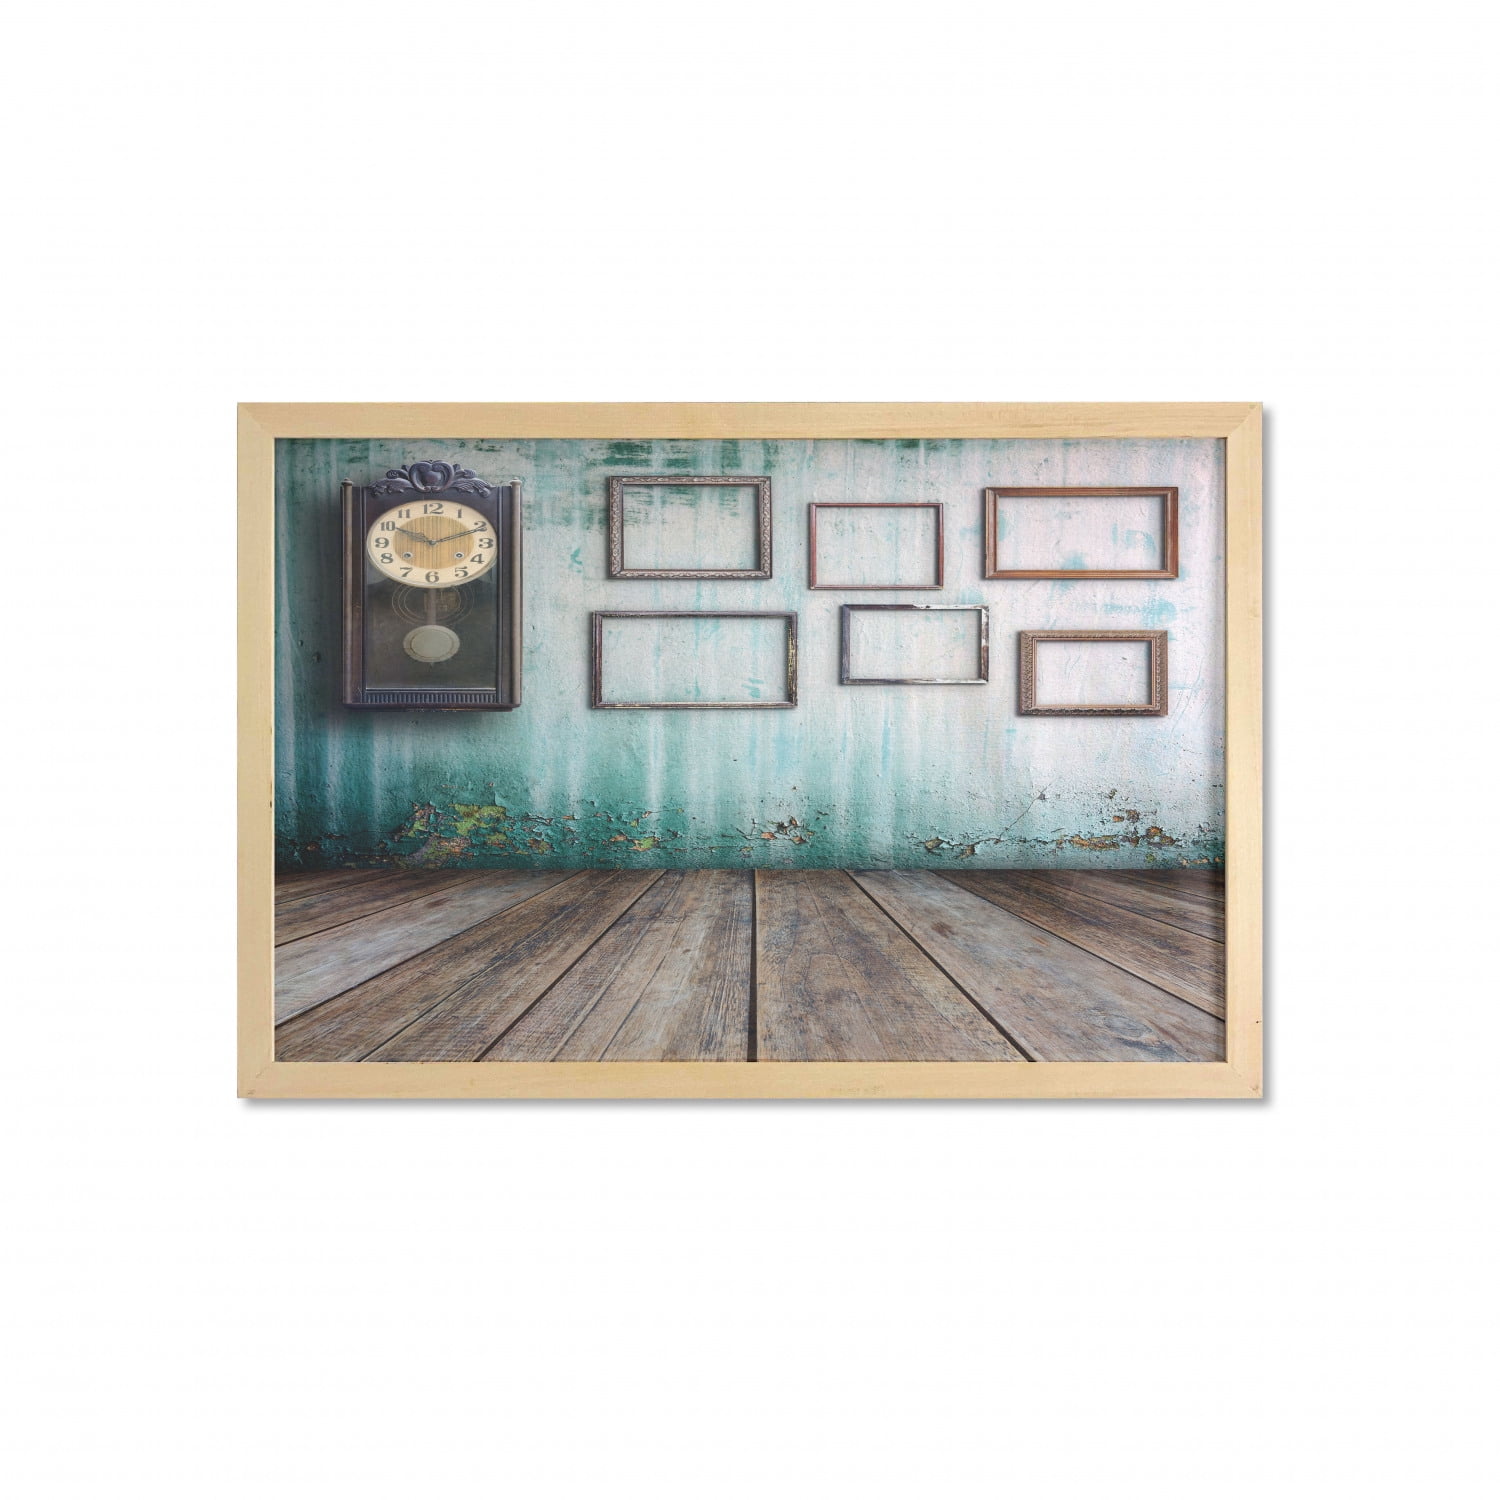 Bedroom Decorations or Dorm Decor Stoner Accessories Under $15 11x14 Unframed Trippy Wall Art Photo Gift Light Up Your Life 100% Organic Fine Art Print Decor 